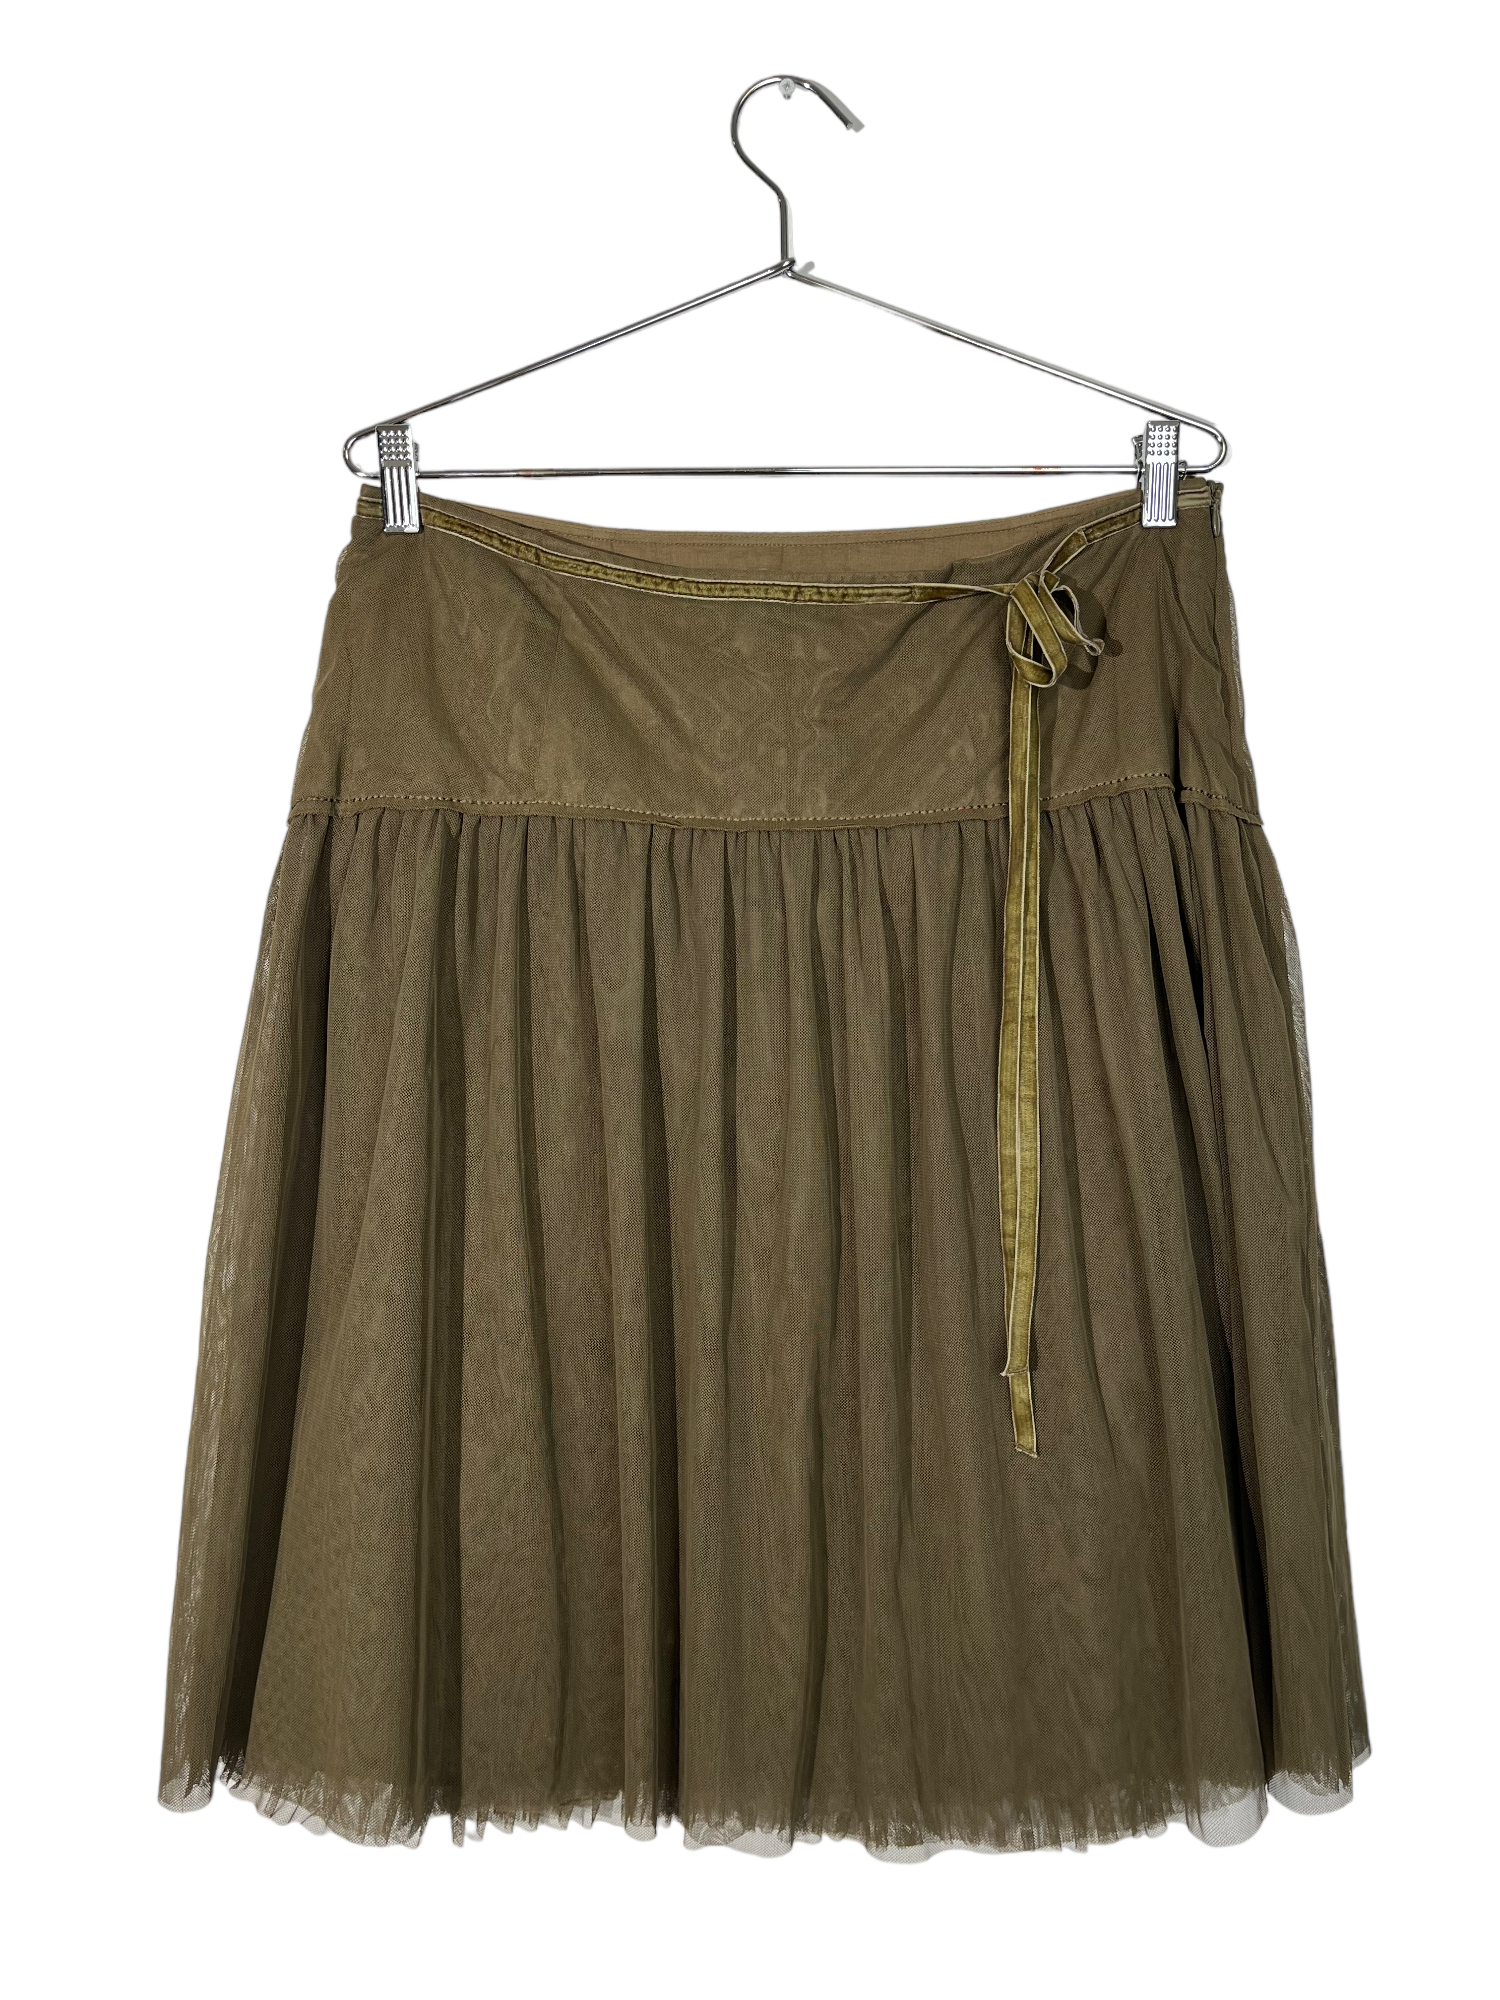 Olive Green Puffy Midi Skirt